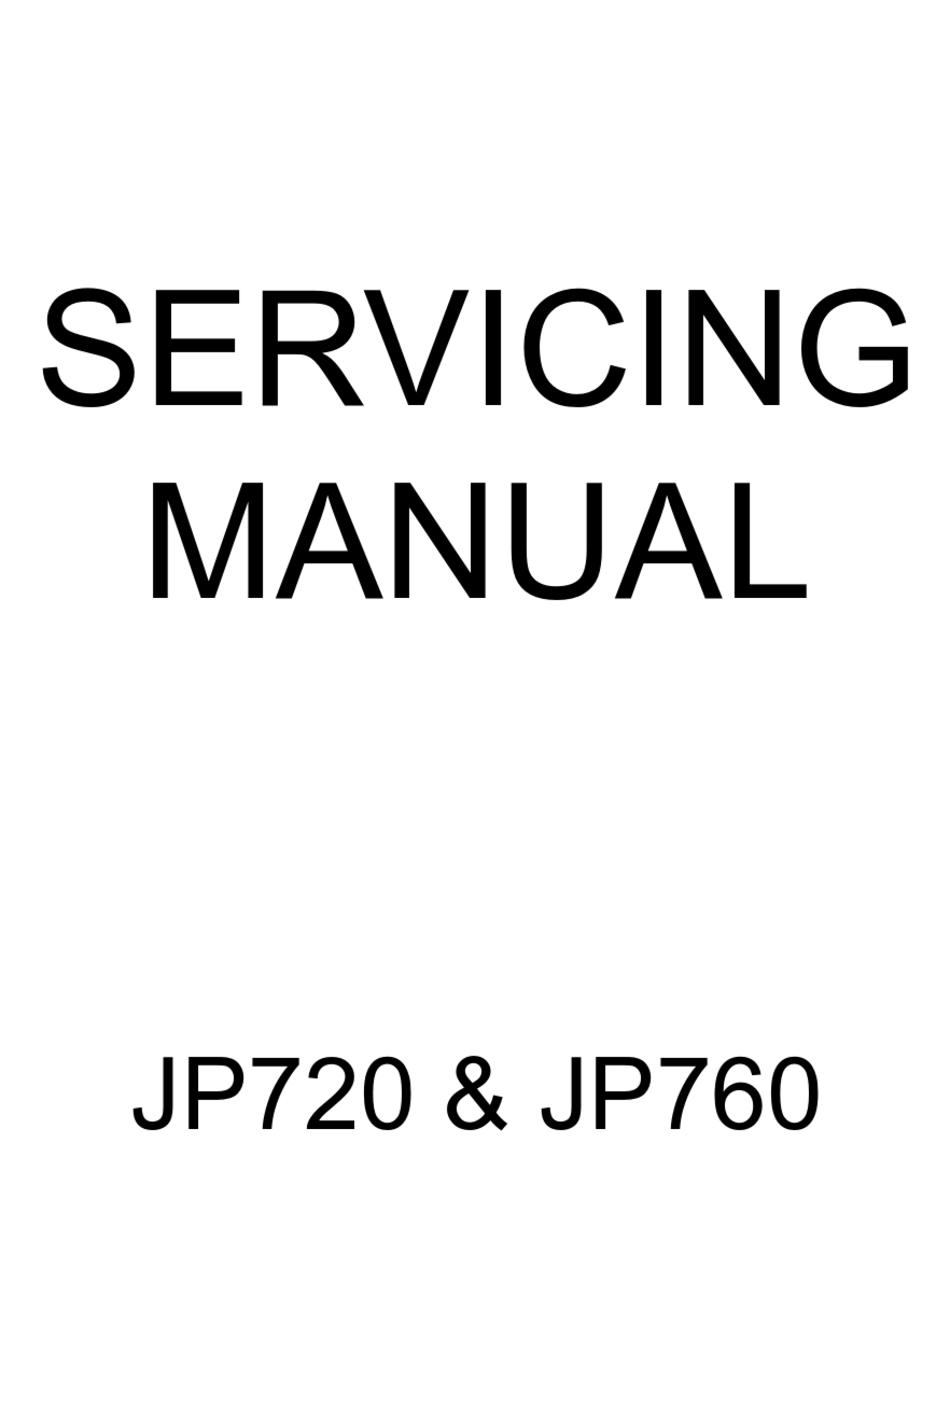 JANOME JP720 SERVICING MANUAL Pdf Download | ManualsLib